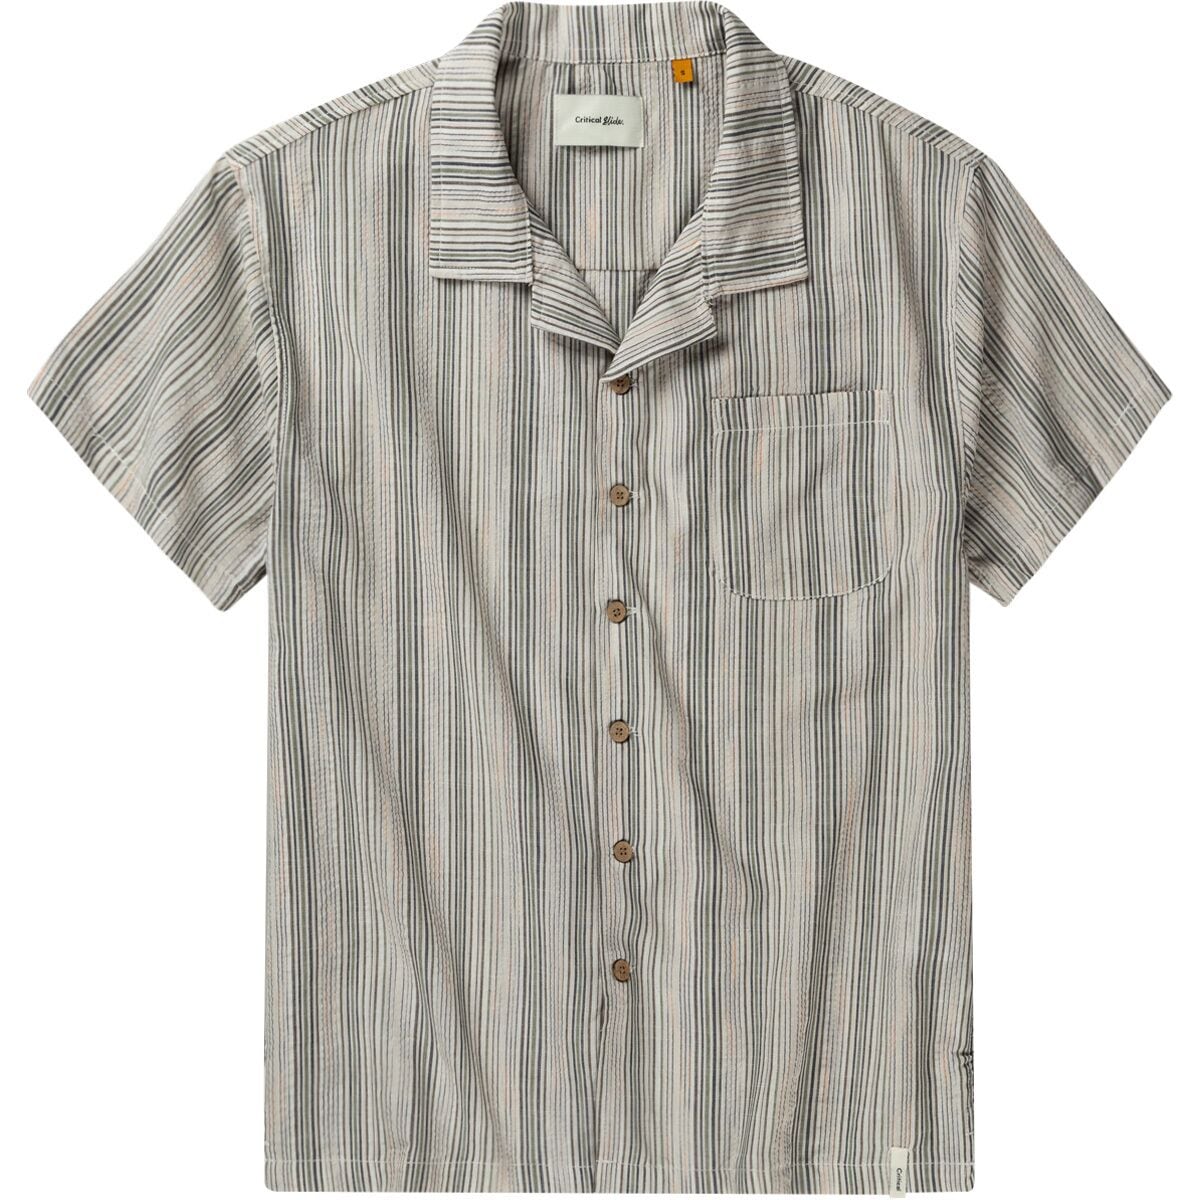 Bawley Short-Sleeve Shirt - Men